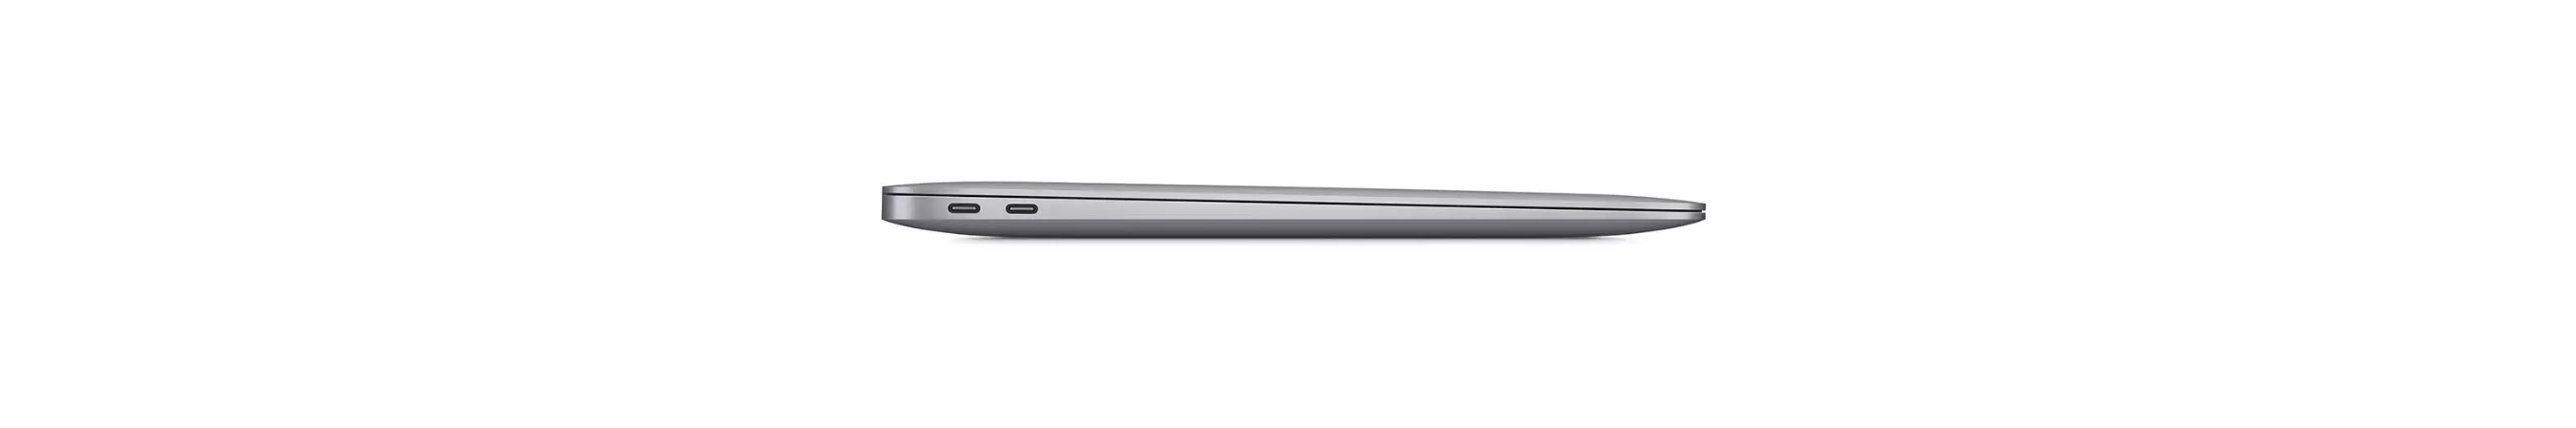 MacBook Air 13 (M1 2020) 8GB 256GB SSD Space Gray, Цвет: Space Gray / Серый космос, Жесткий диск SSD: 256 Гб, Оперативная память: 8 Гб, изображение 5